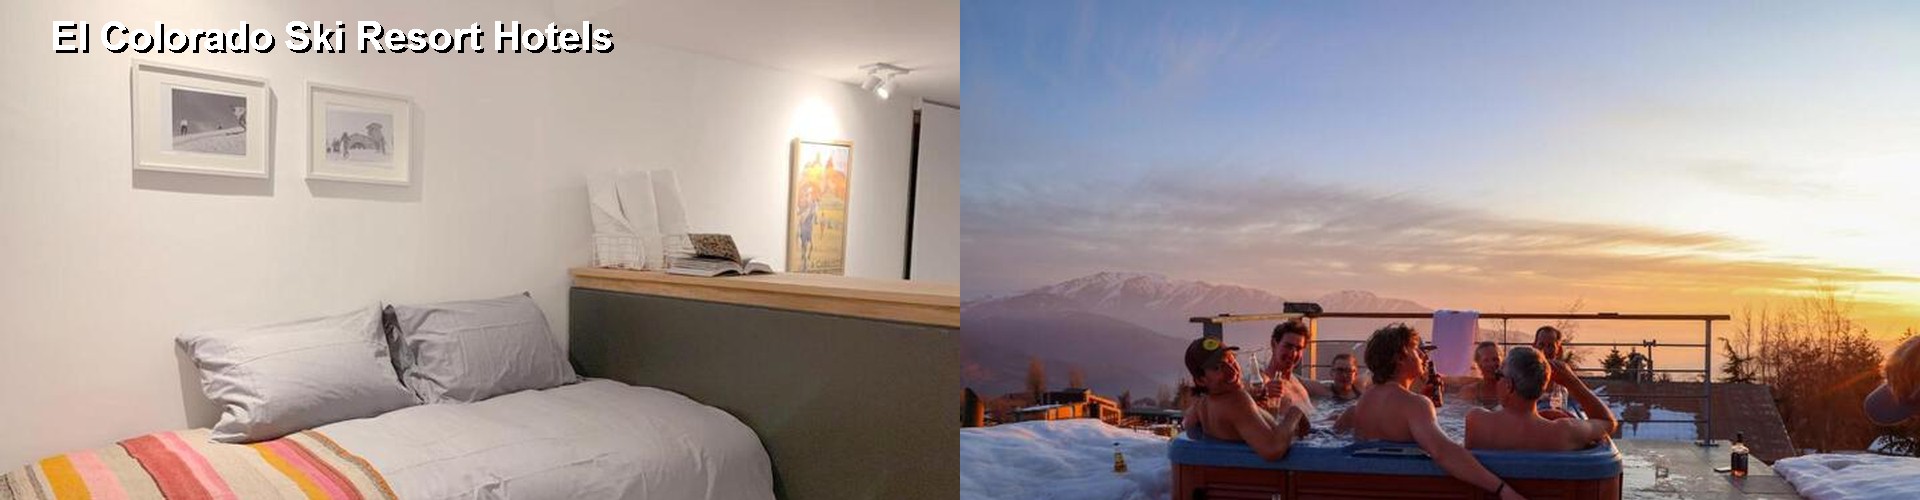 5 Best Hotels near El Colorado Ski Resort